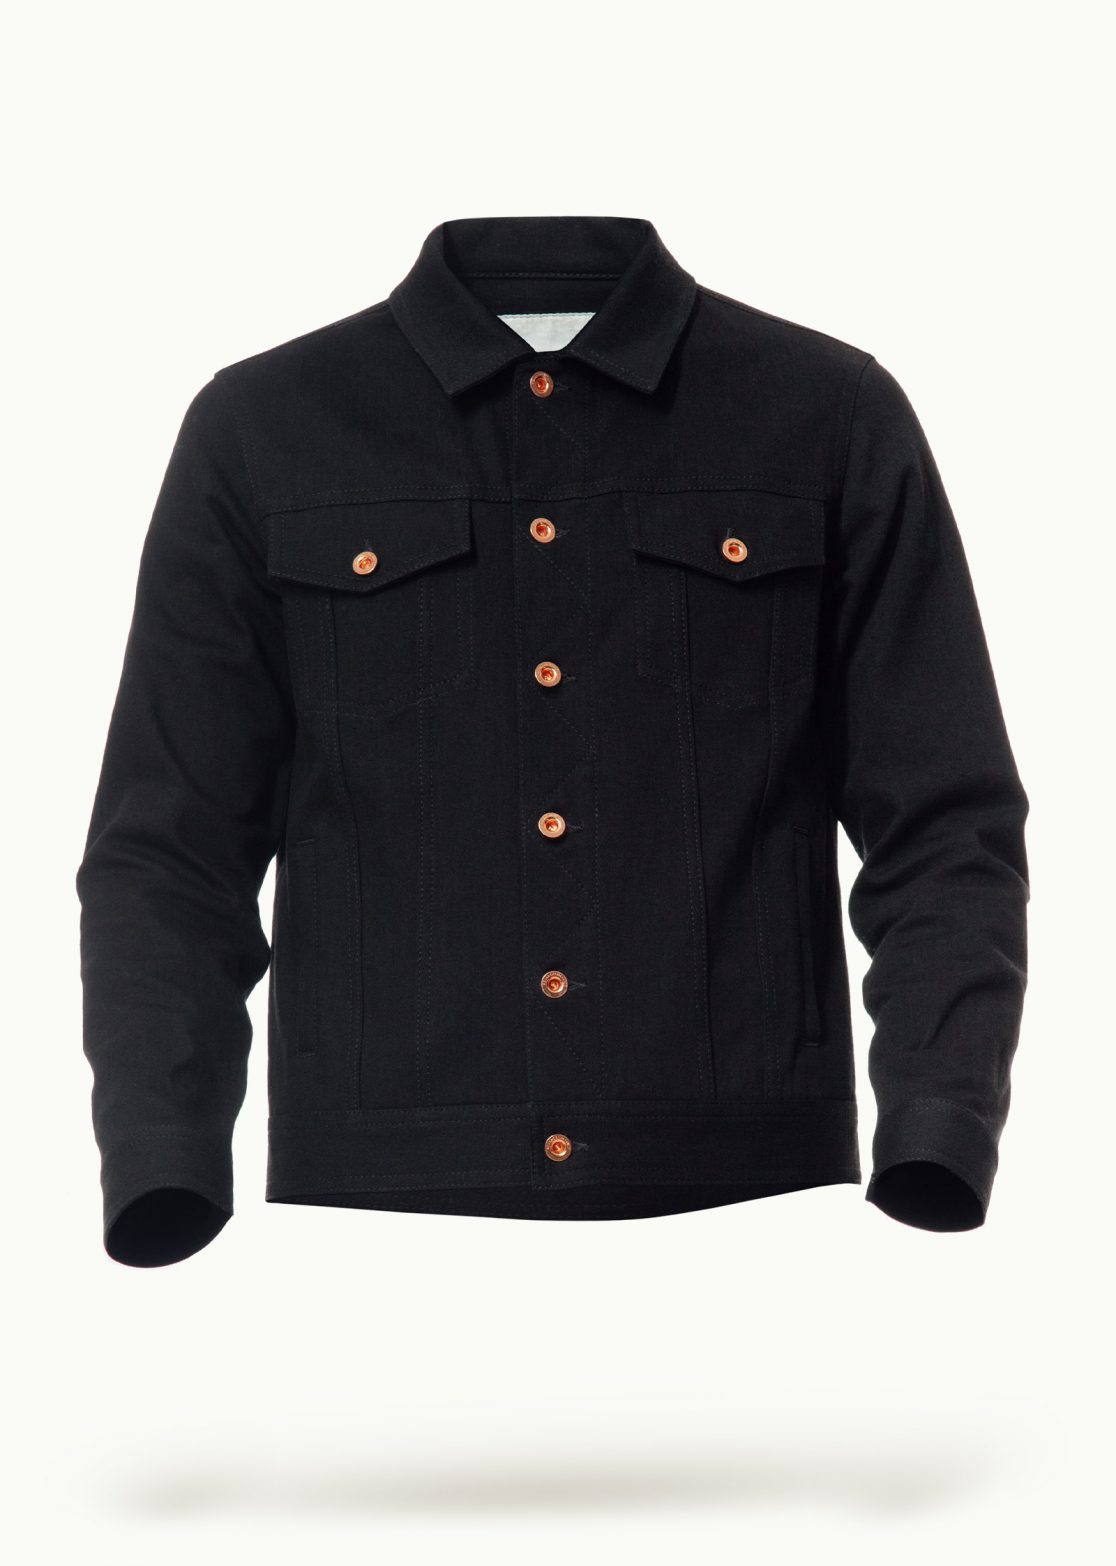 SALE - Men - Jackets - Denim - Outerwear - Clyde Denim Jacket 12oz Image Primary